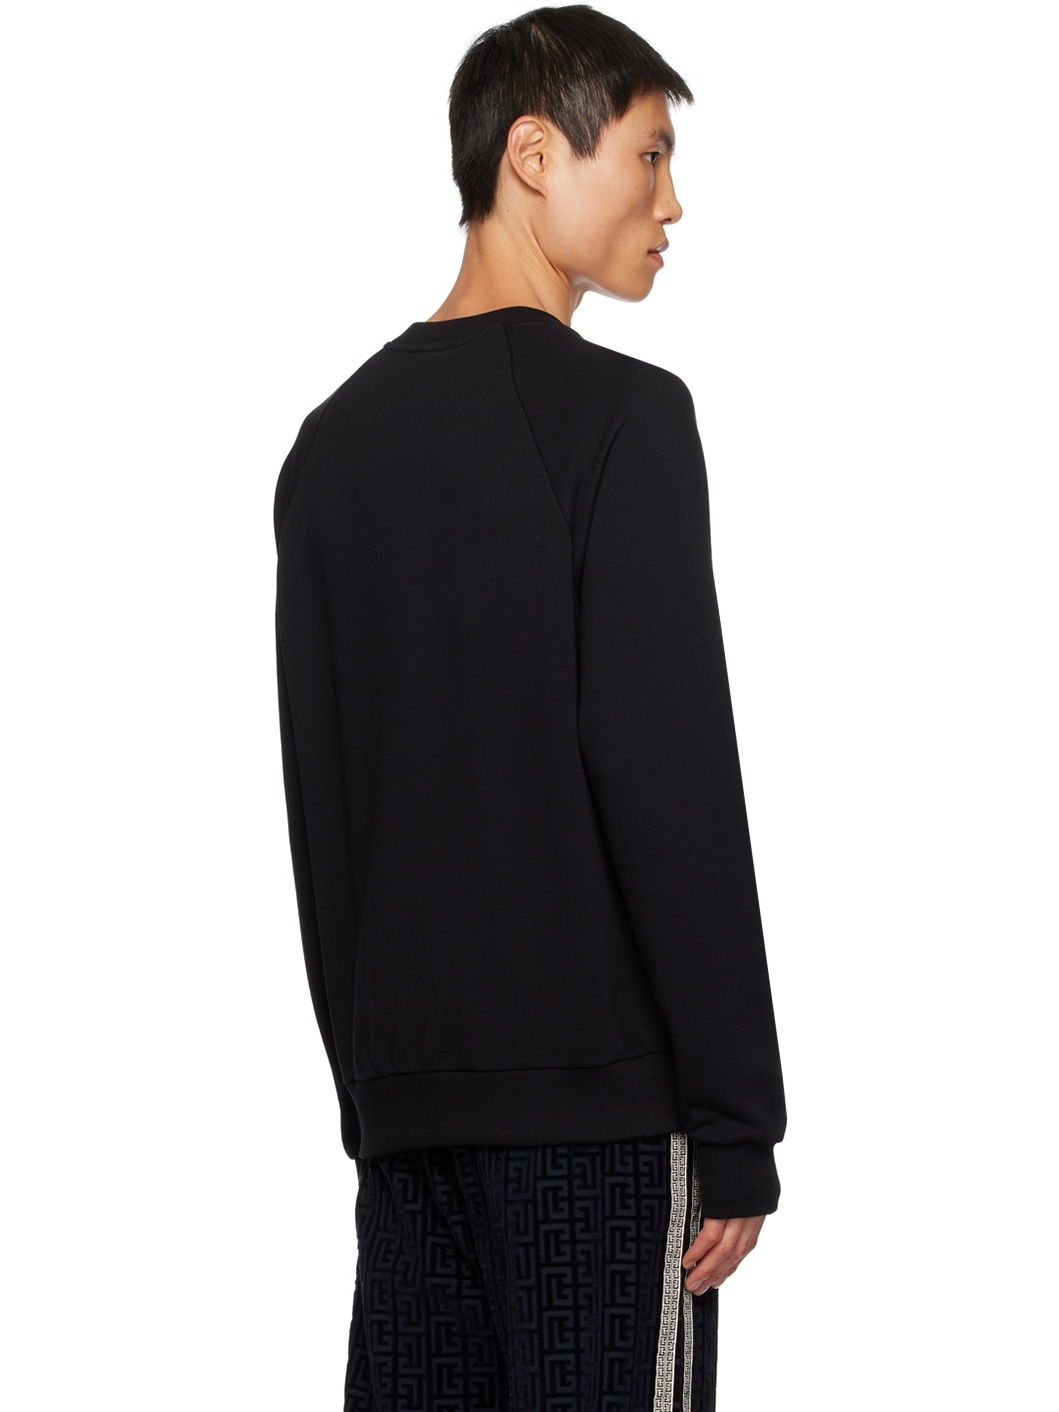 Black Print Sweatshirt - 3